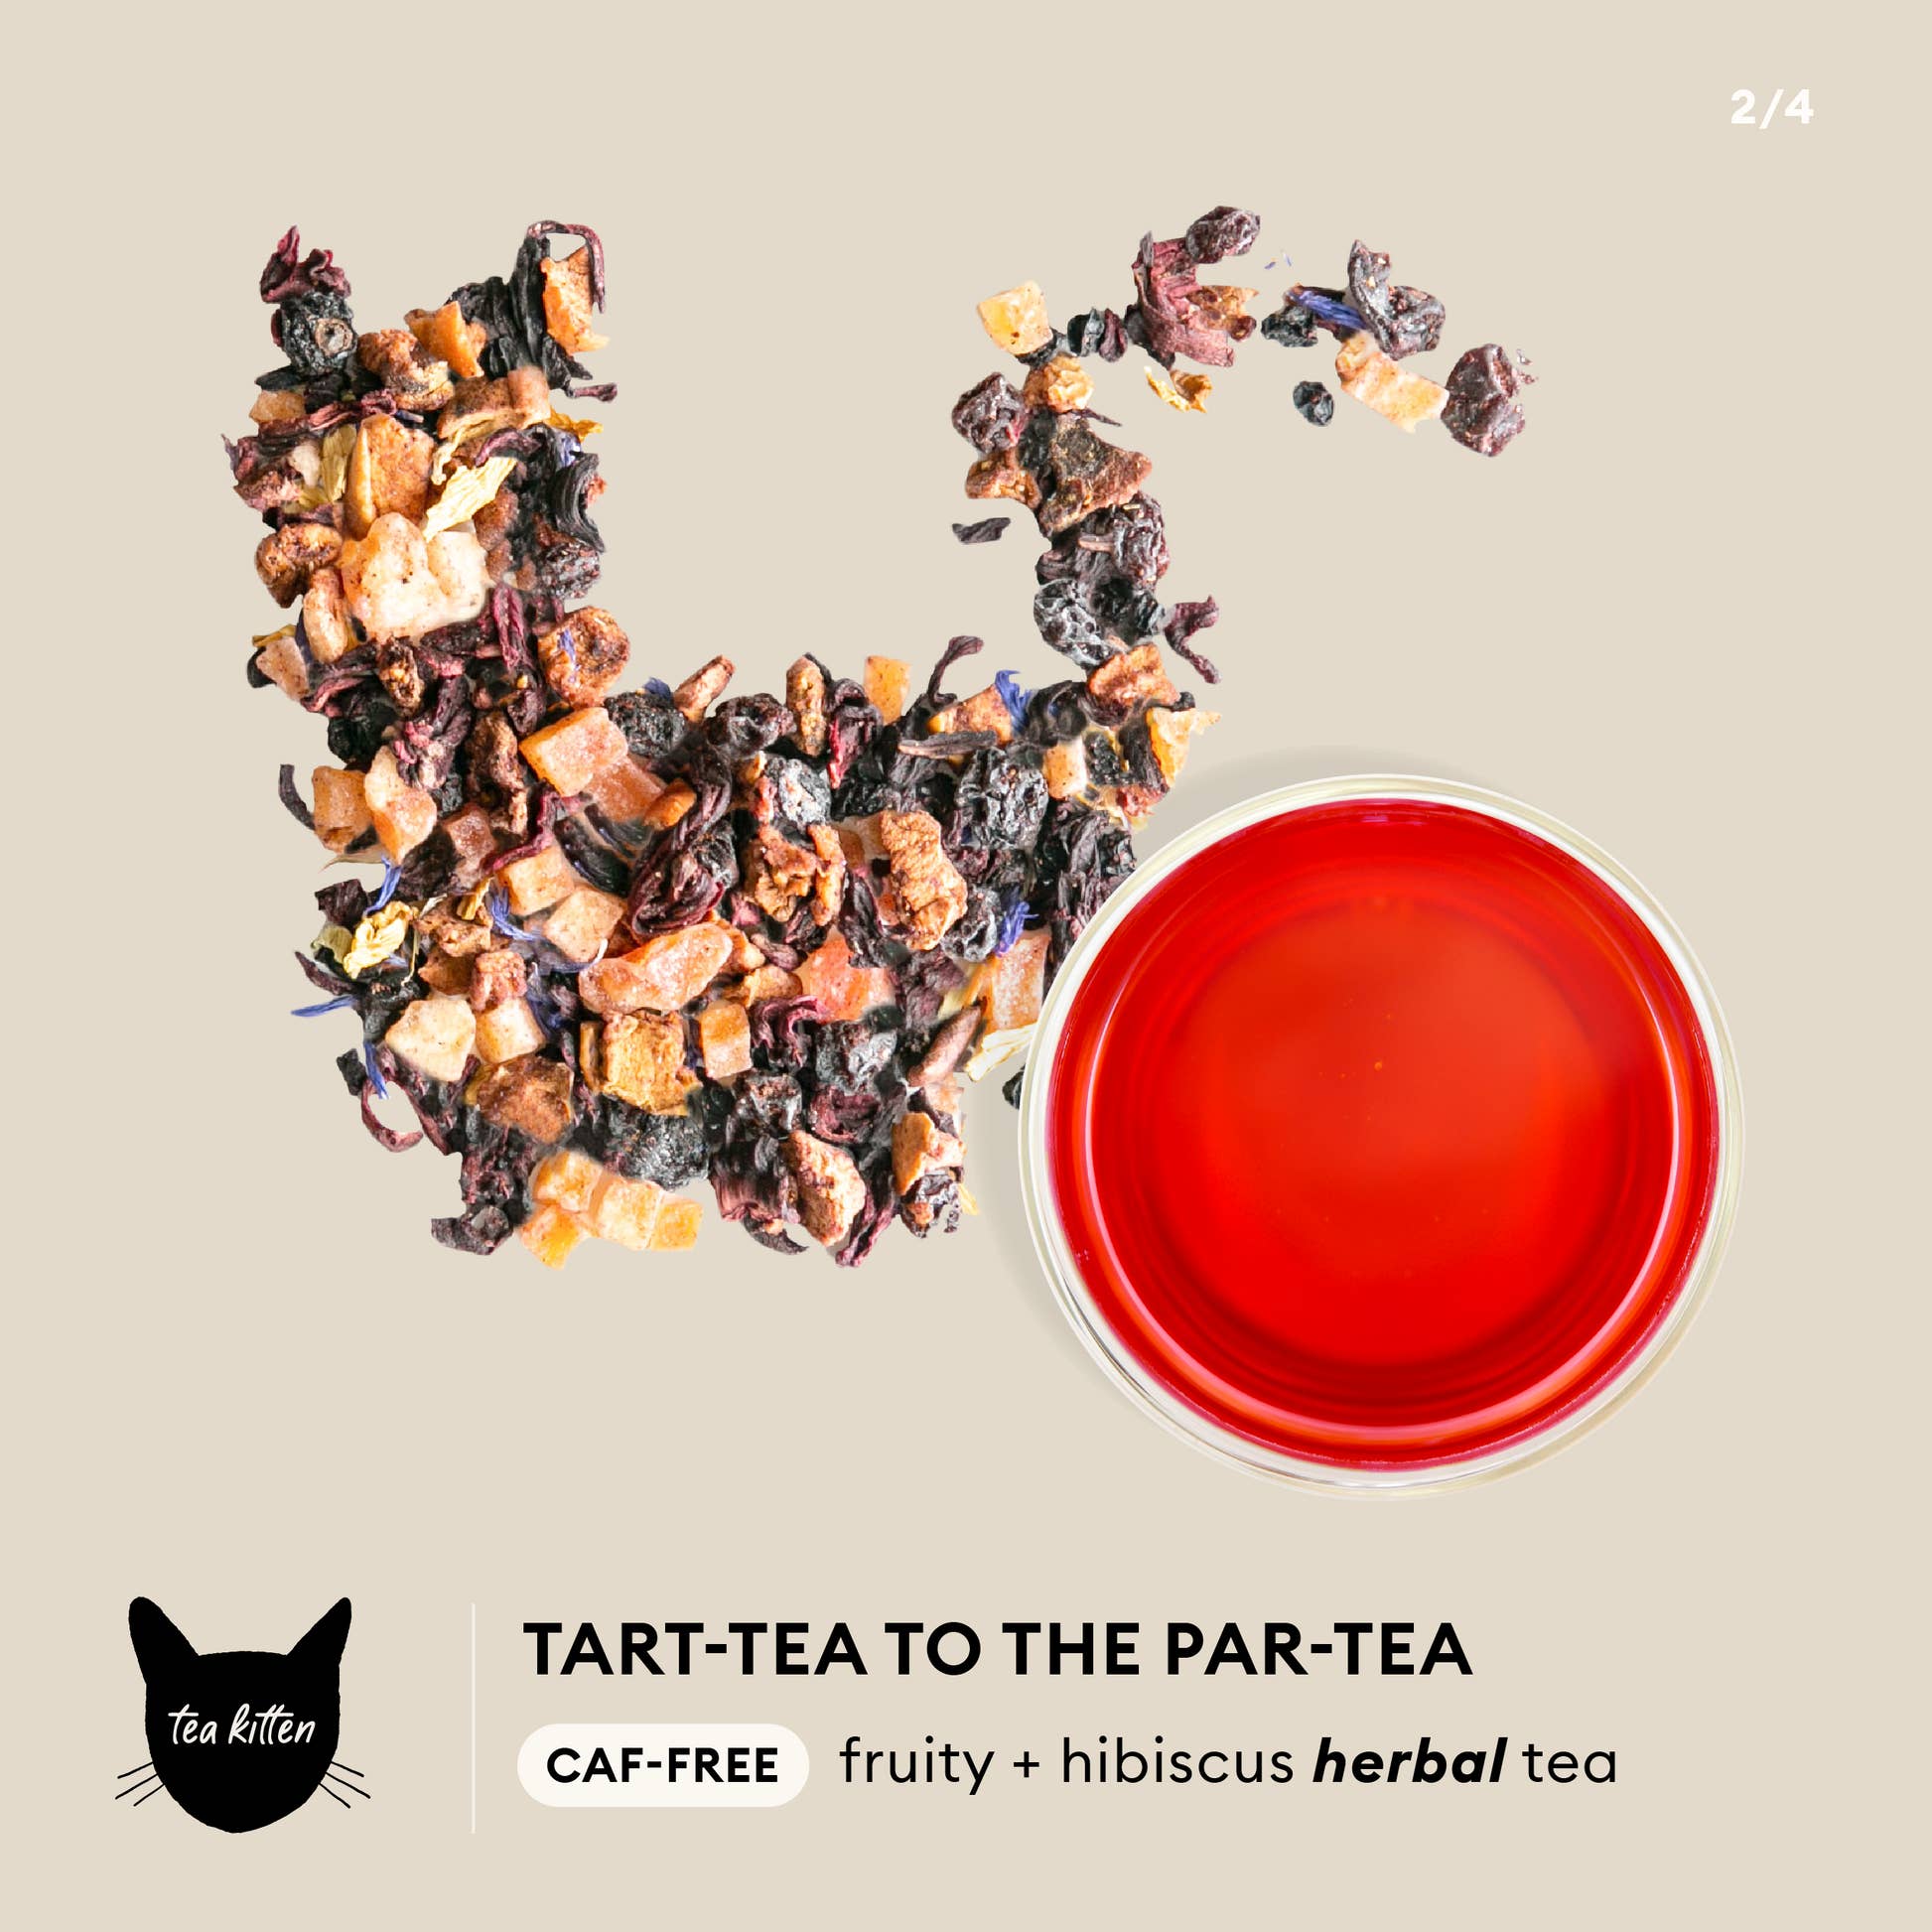 Tea Kitten - Tar-Tea to the Par-Tea Infographic - CAF-FREE fruity + hibiscus herbal tea